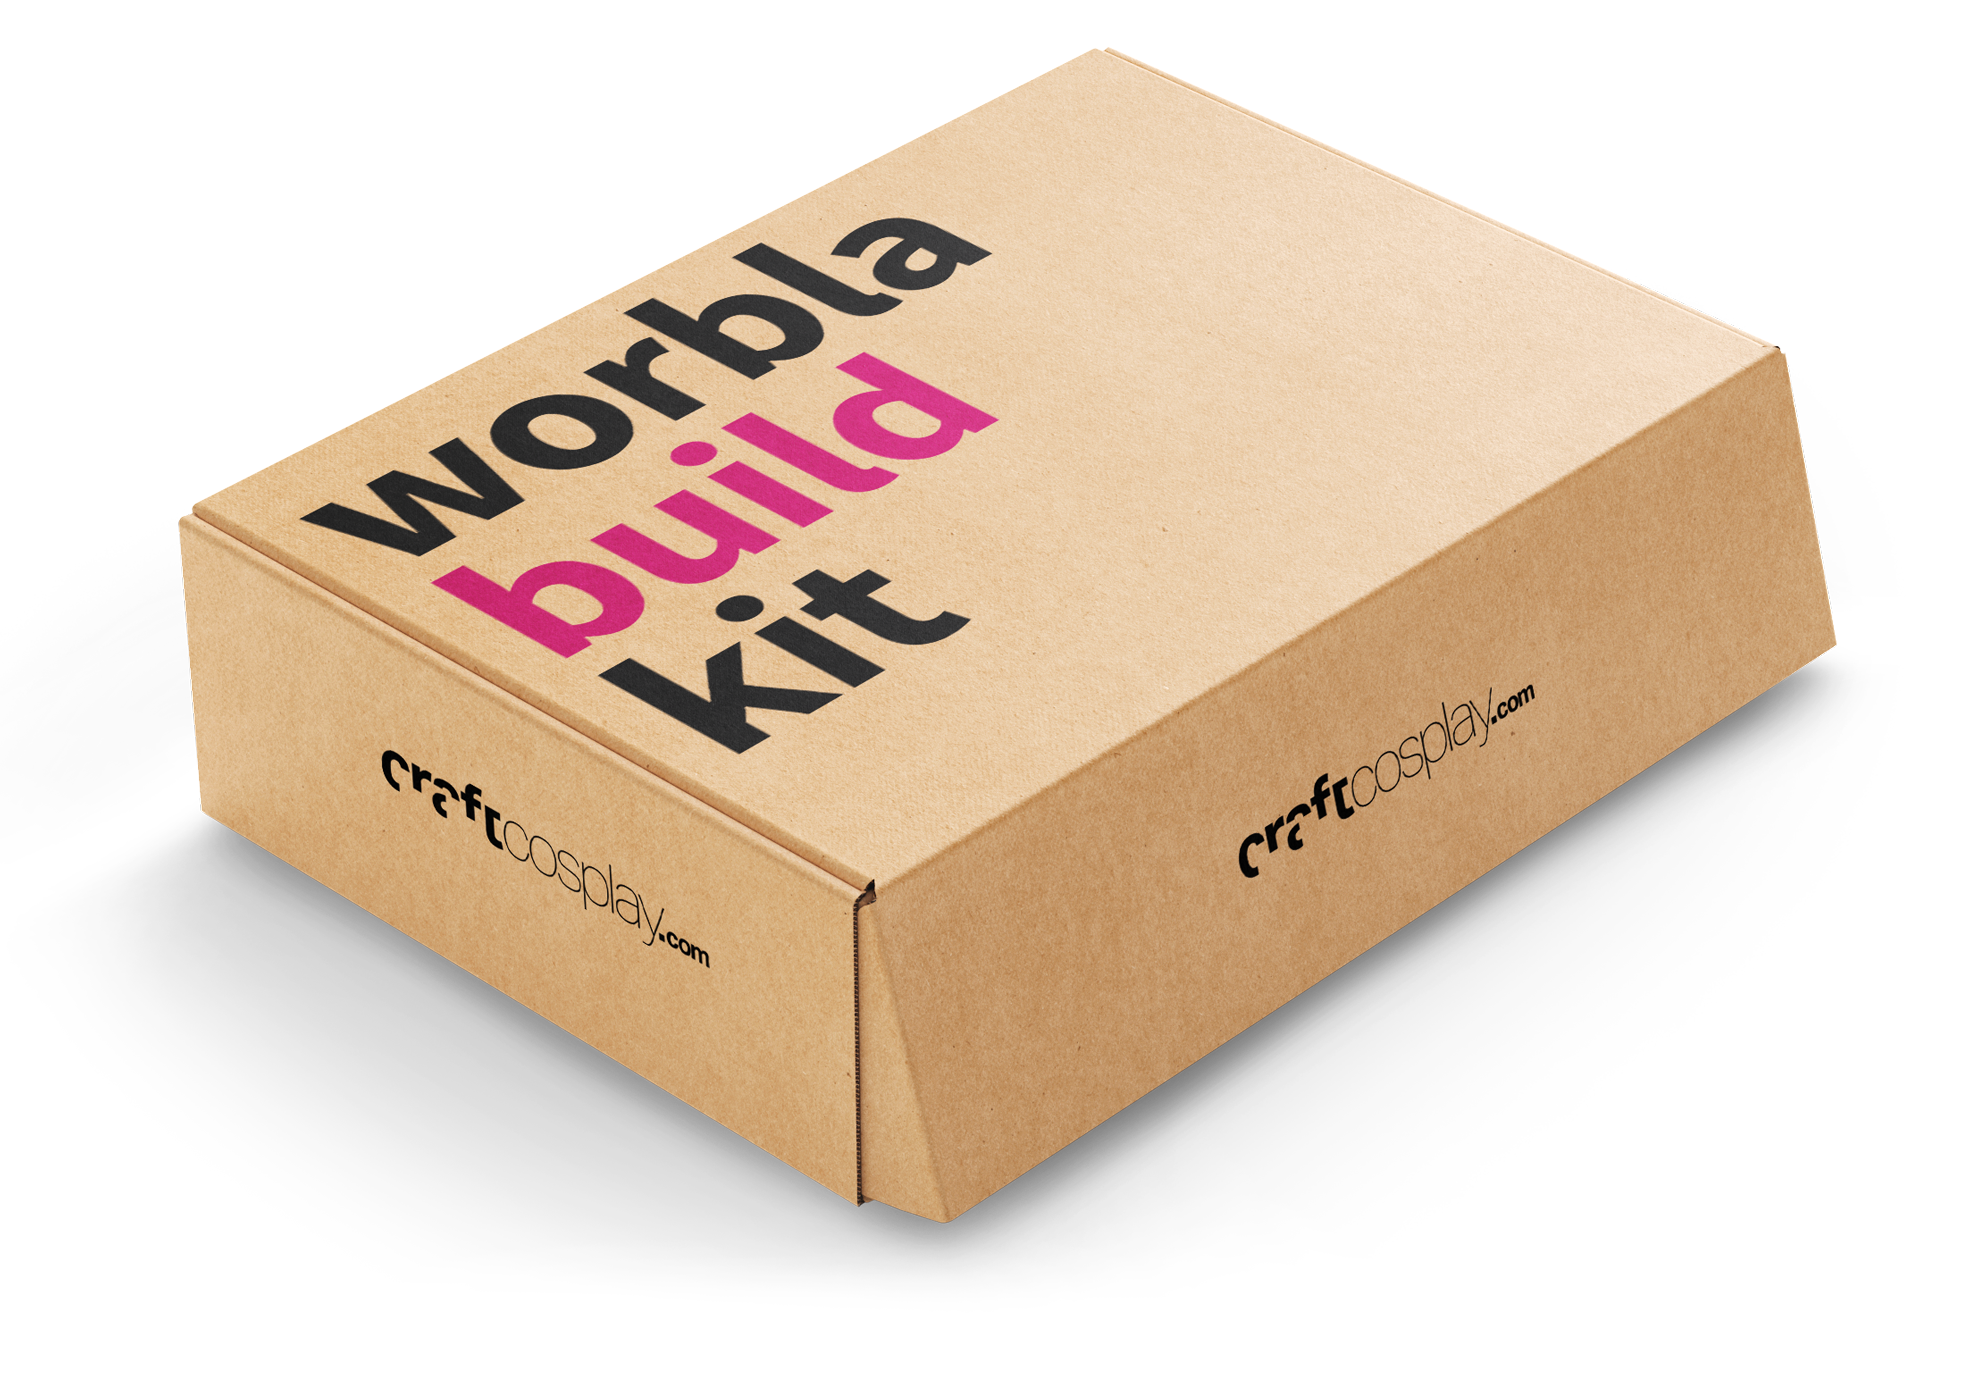 CraftCosplay Worbla Build Kit